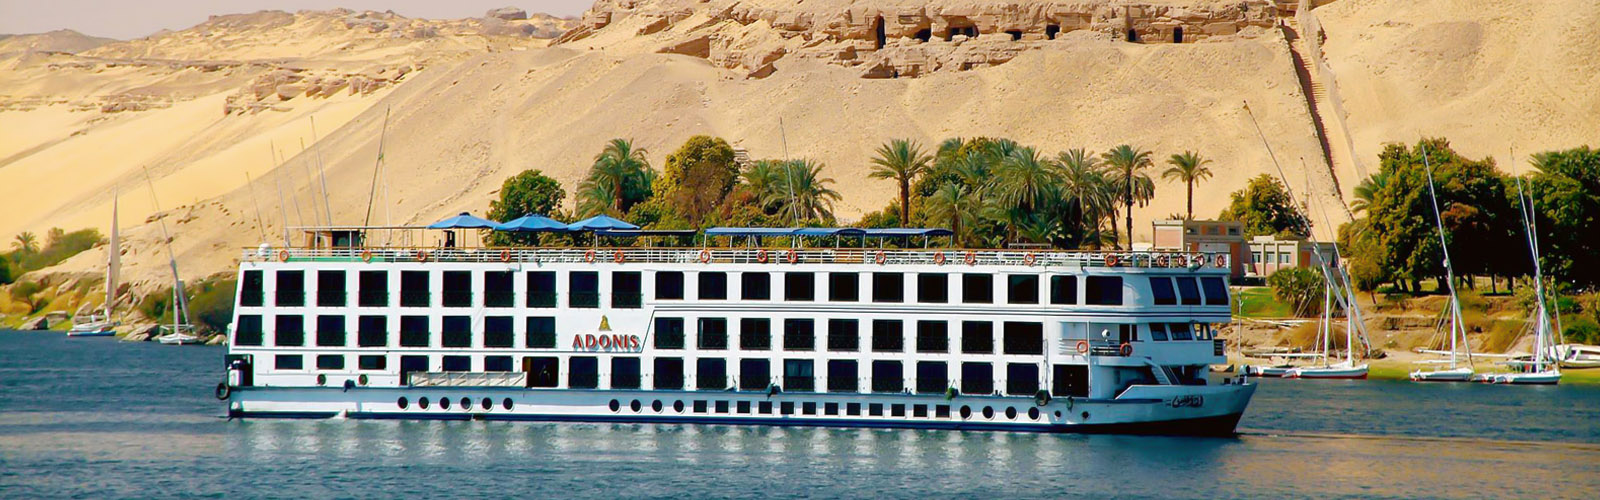 Nile River Cruise Ships